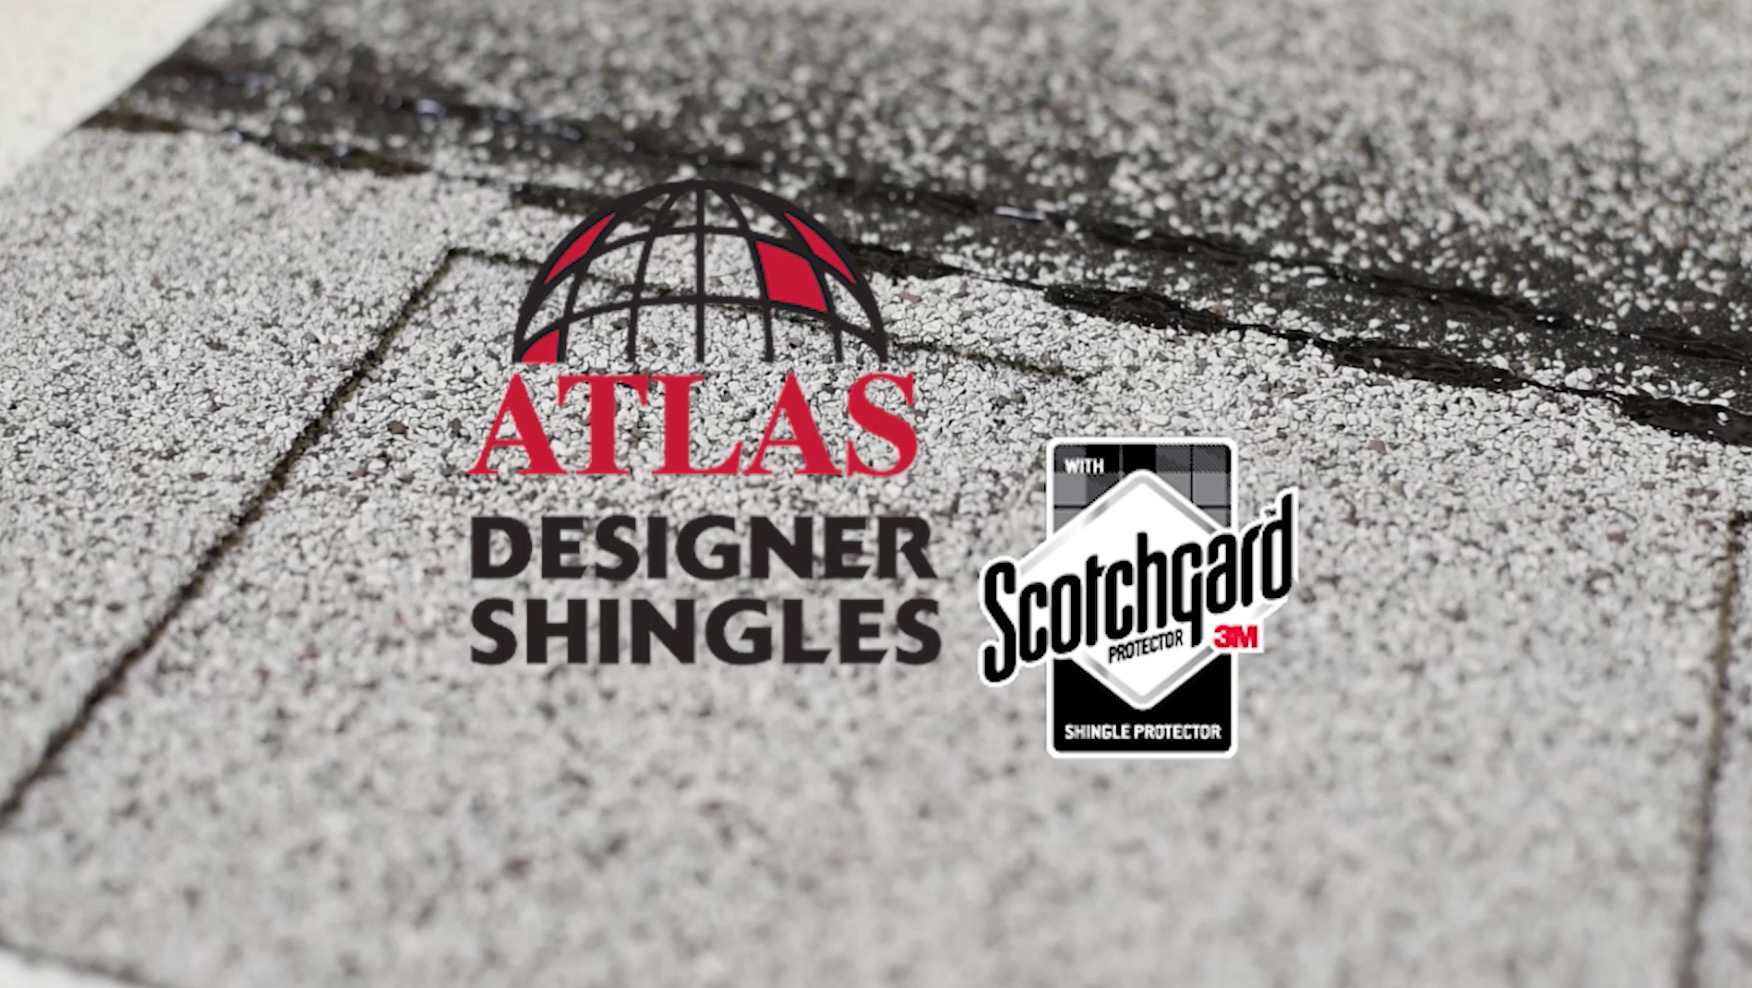 Scotchgard Shingles | Atlas Roofing